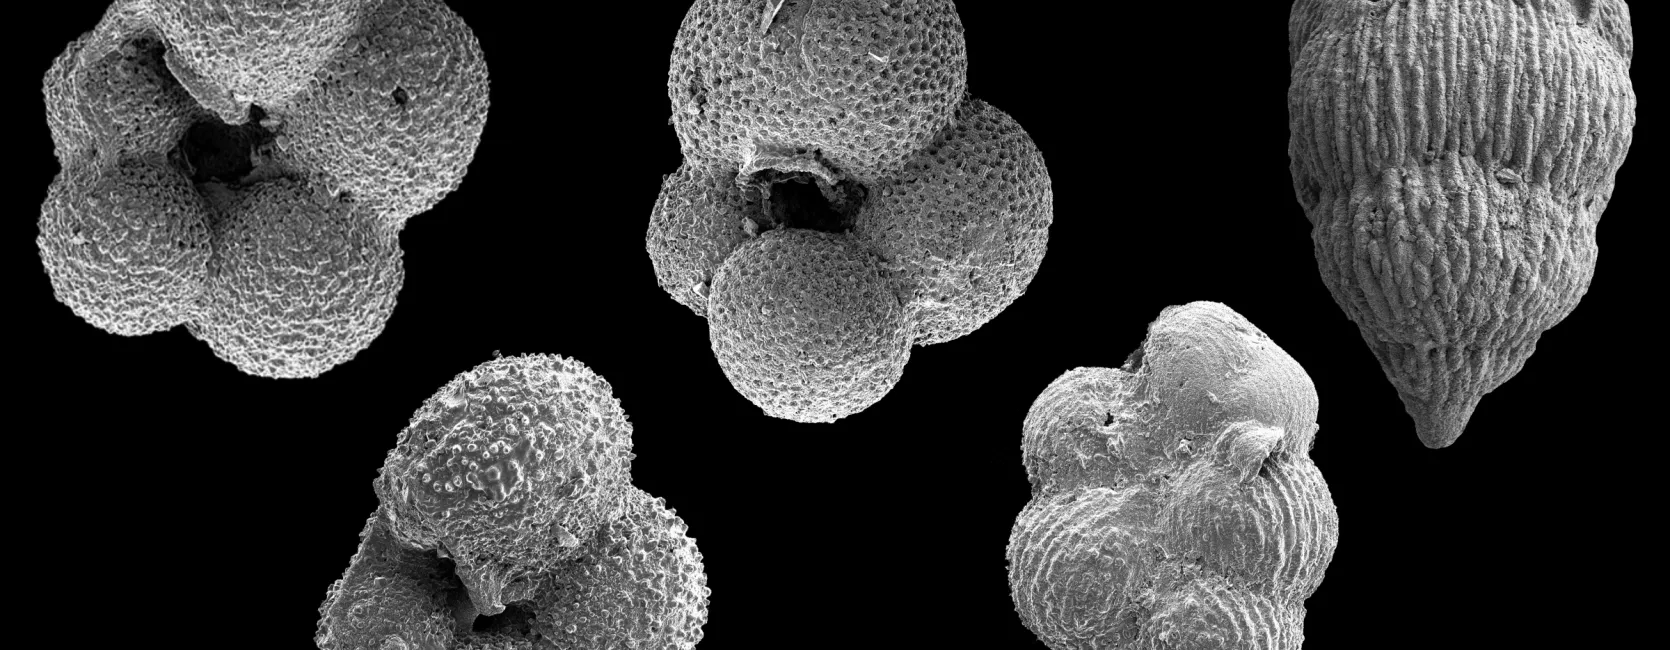 image of 5 scanning electron microscope images of foraminifera